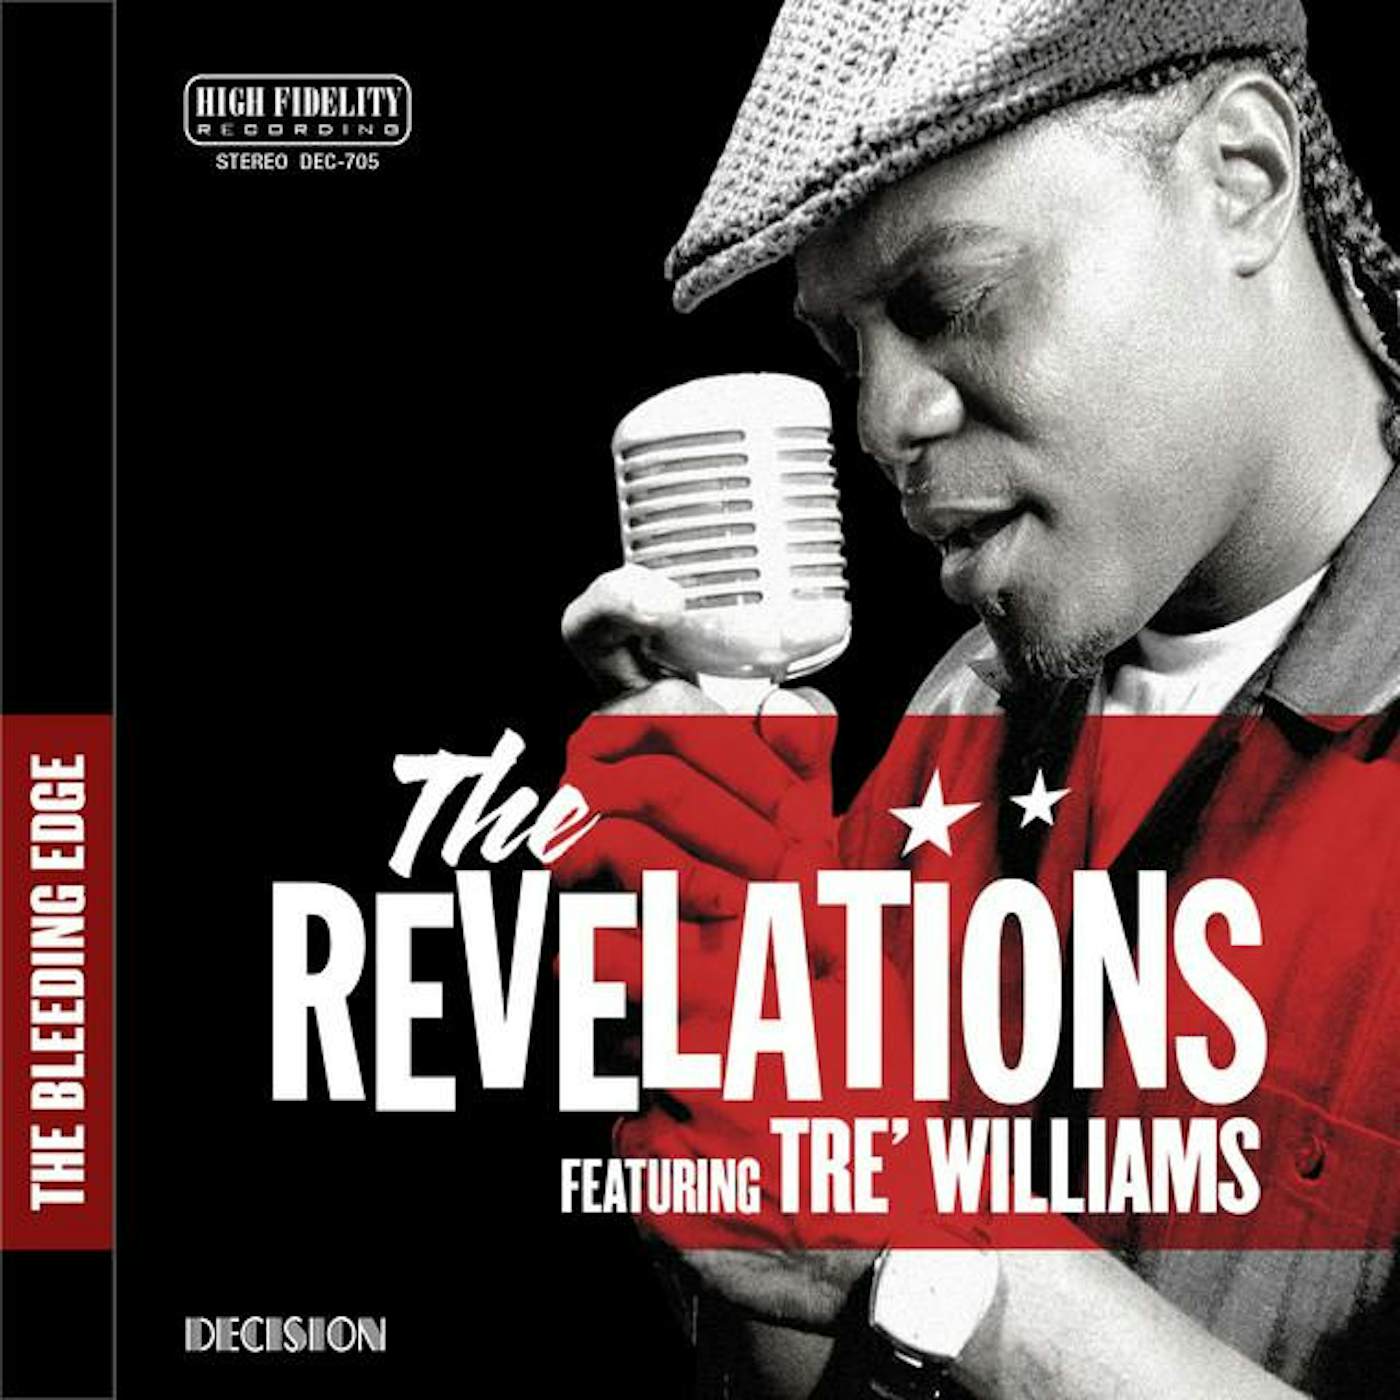 The Revelations featuring Tre Williams